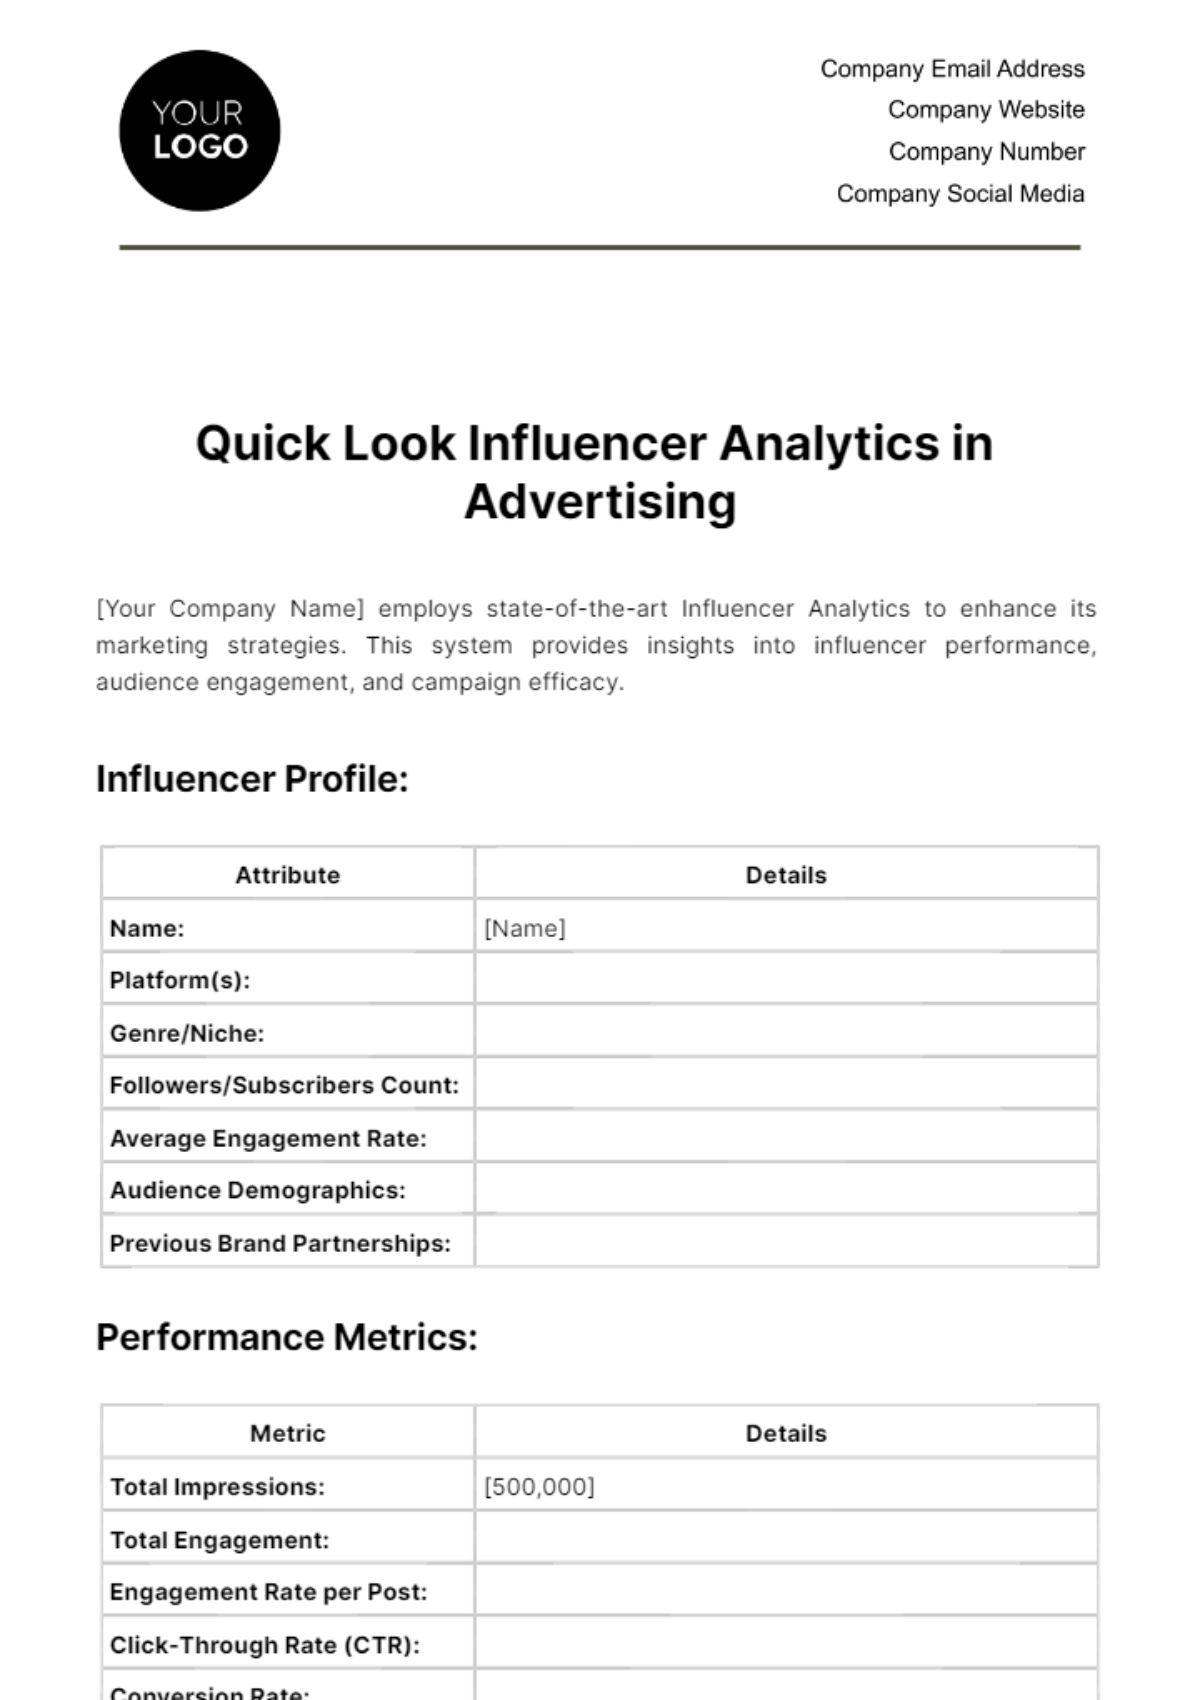 Quick Look Influencer Analytics in Advertising Template